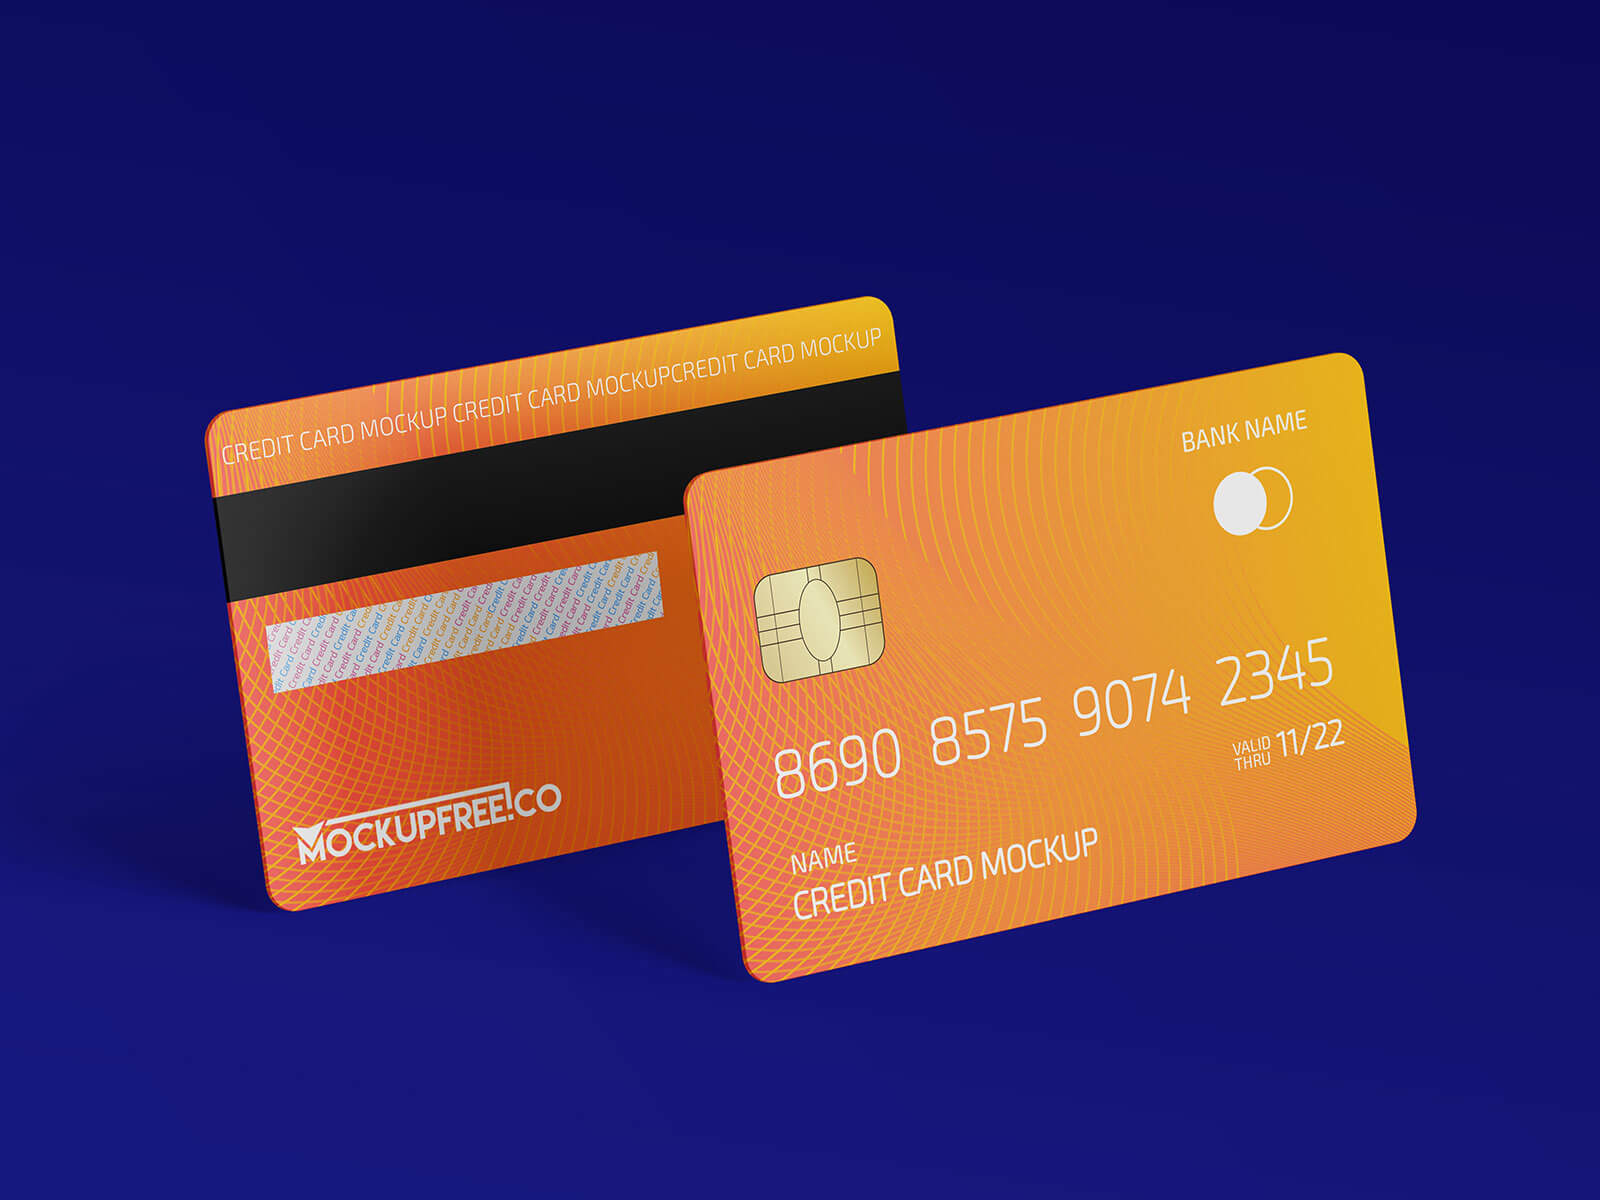 Credit Debit Bank Card Mockup PSD Set